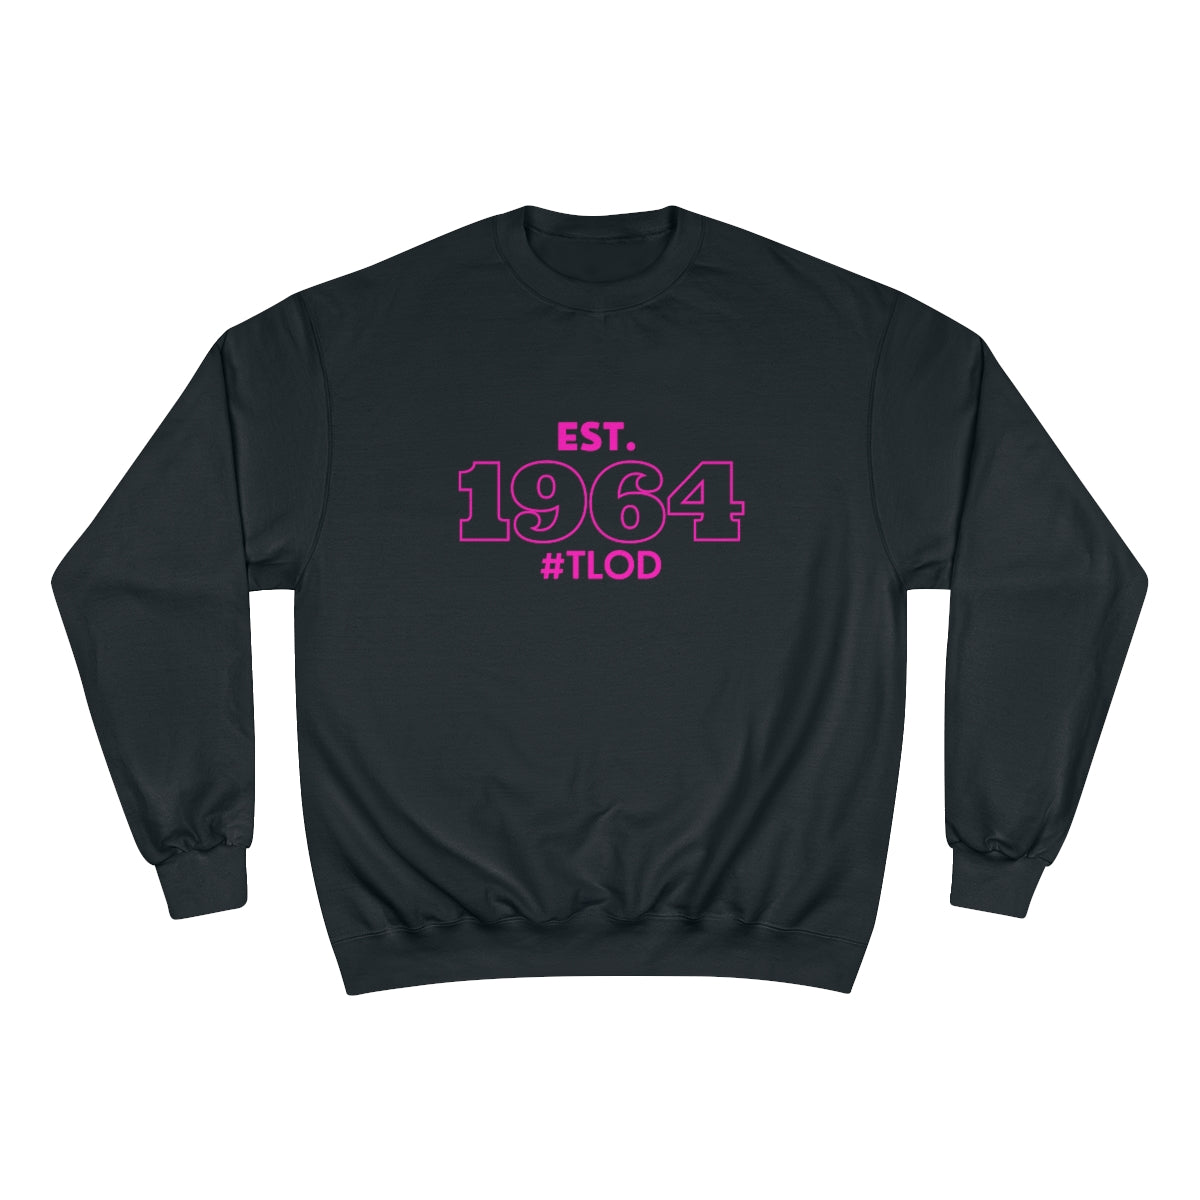 EST. 1964 #TLOD Champion Sweatshirt